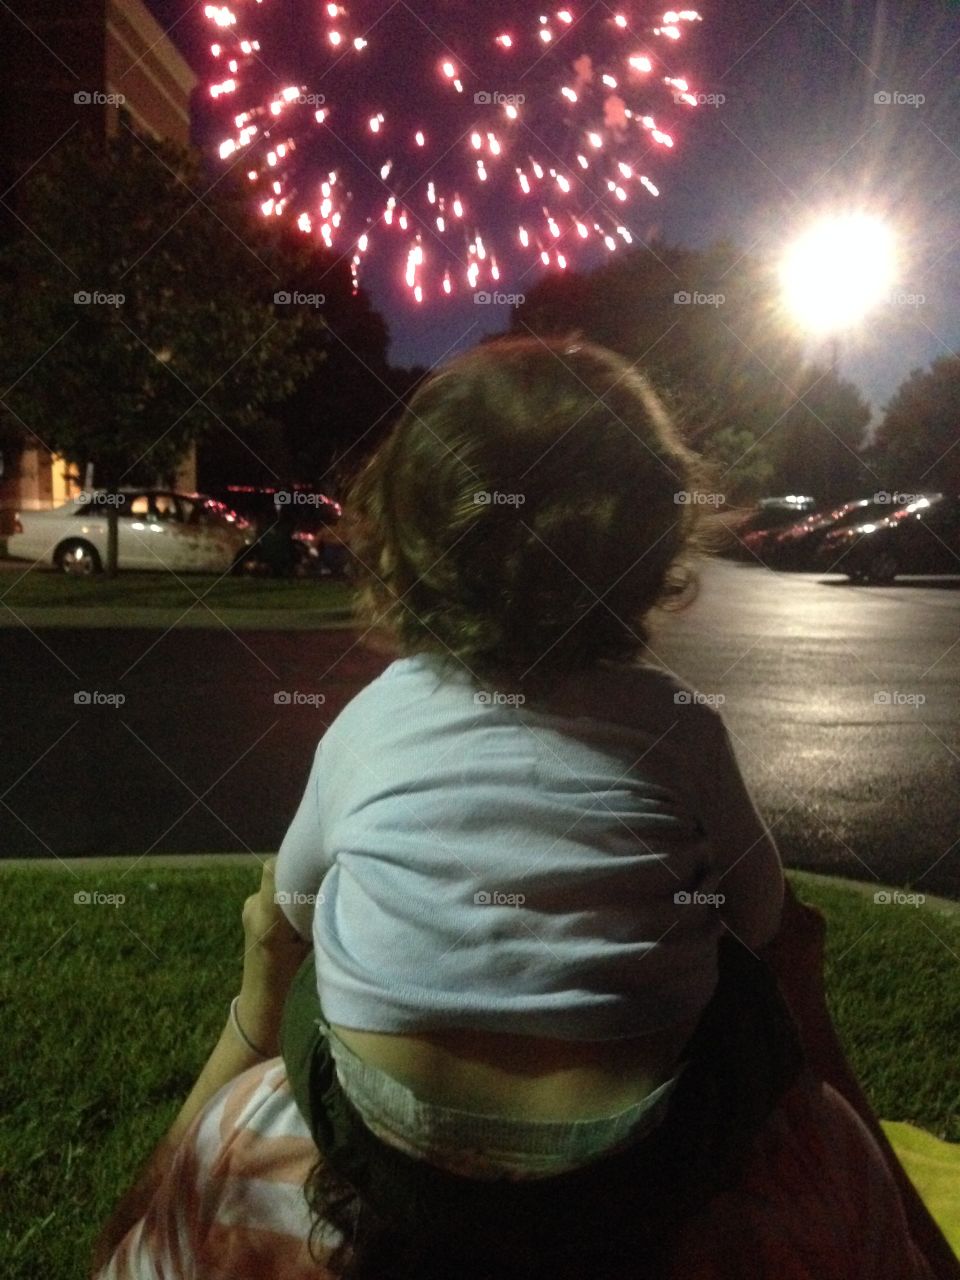 Enjoying the fireworks